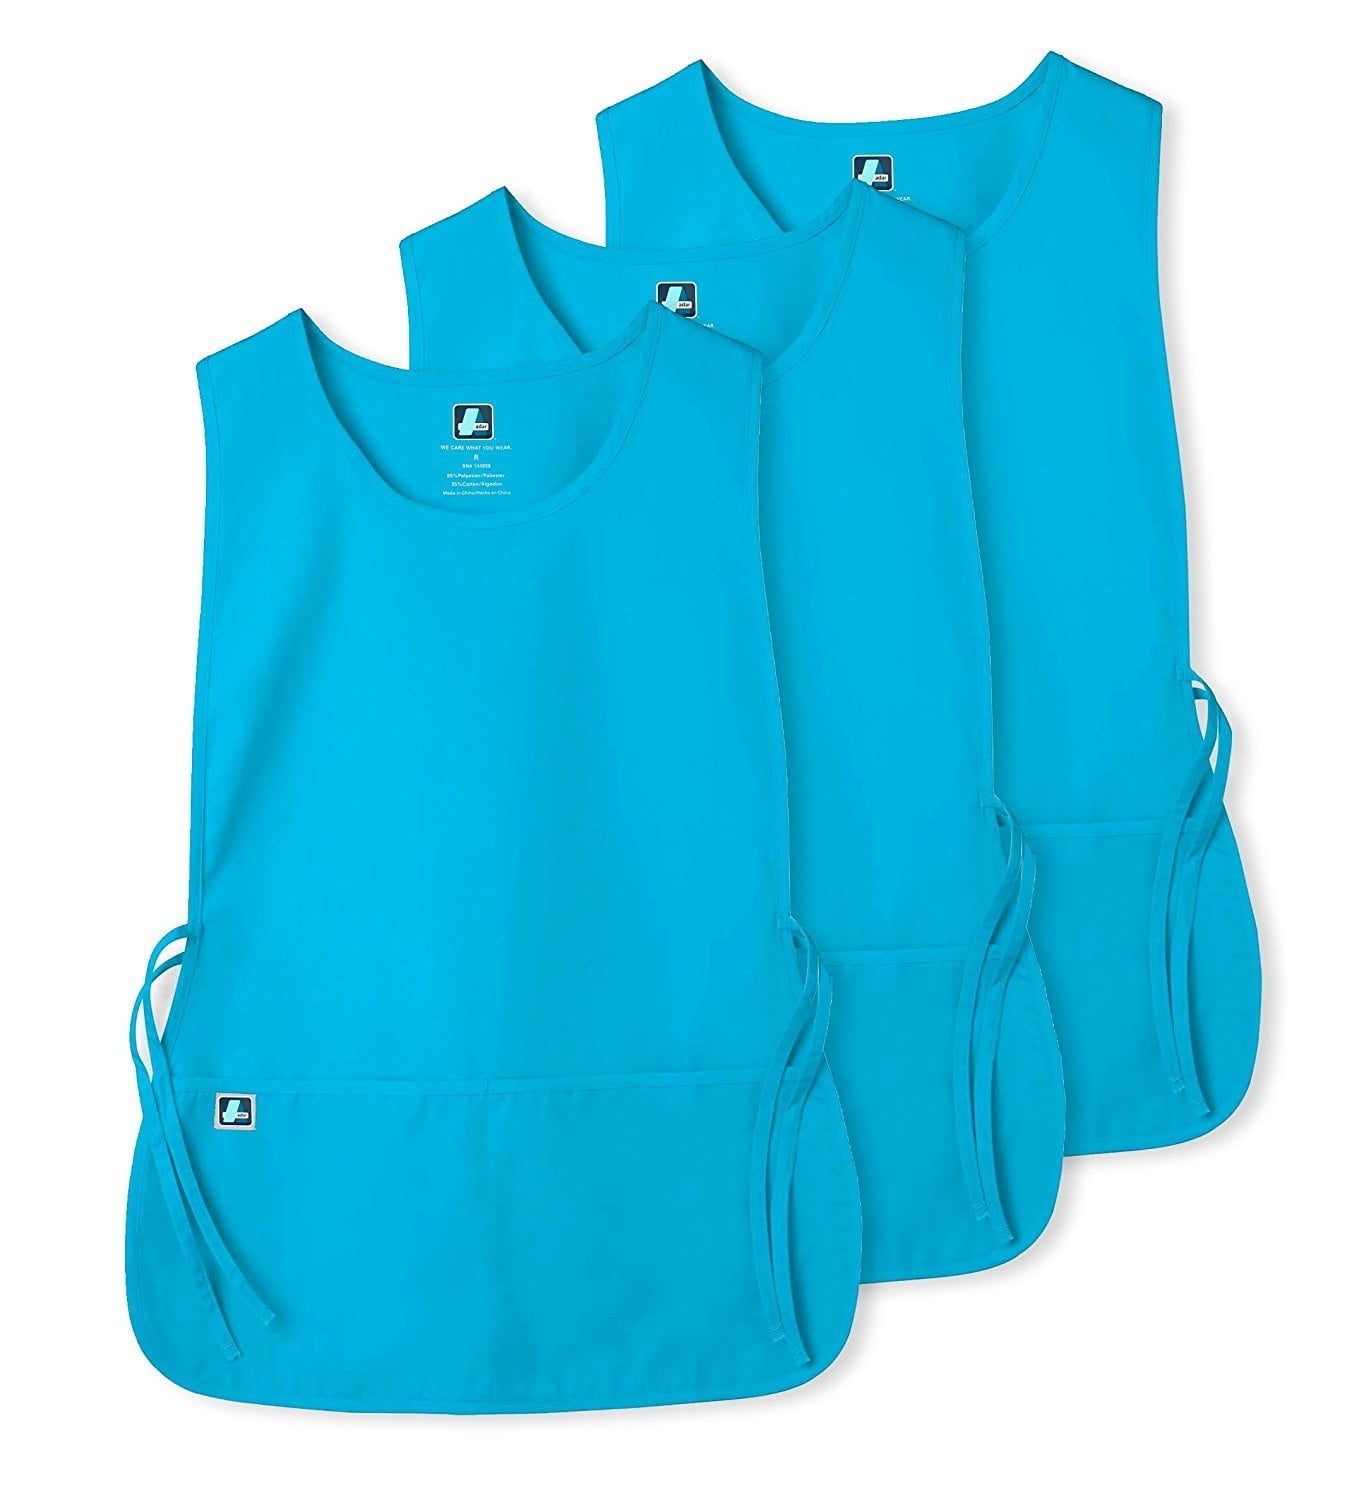 Adar Women's Cobbler Bib Apron Adjustable 2 Sides Ties and Deep Front Pockets 